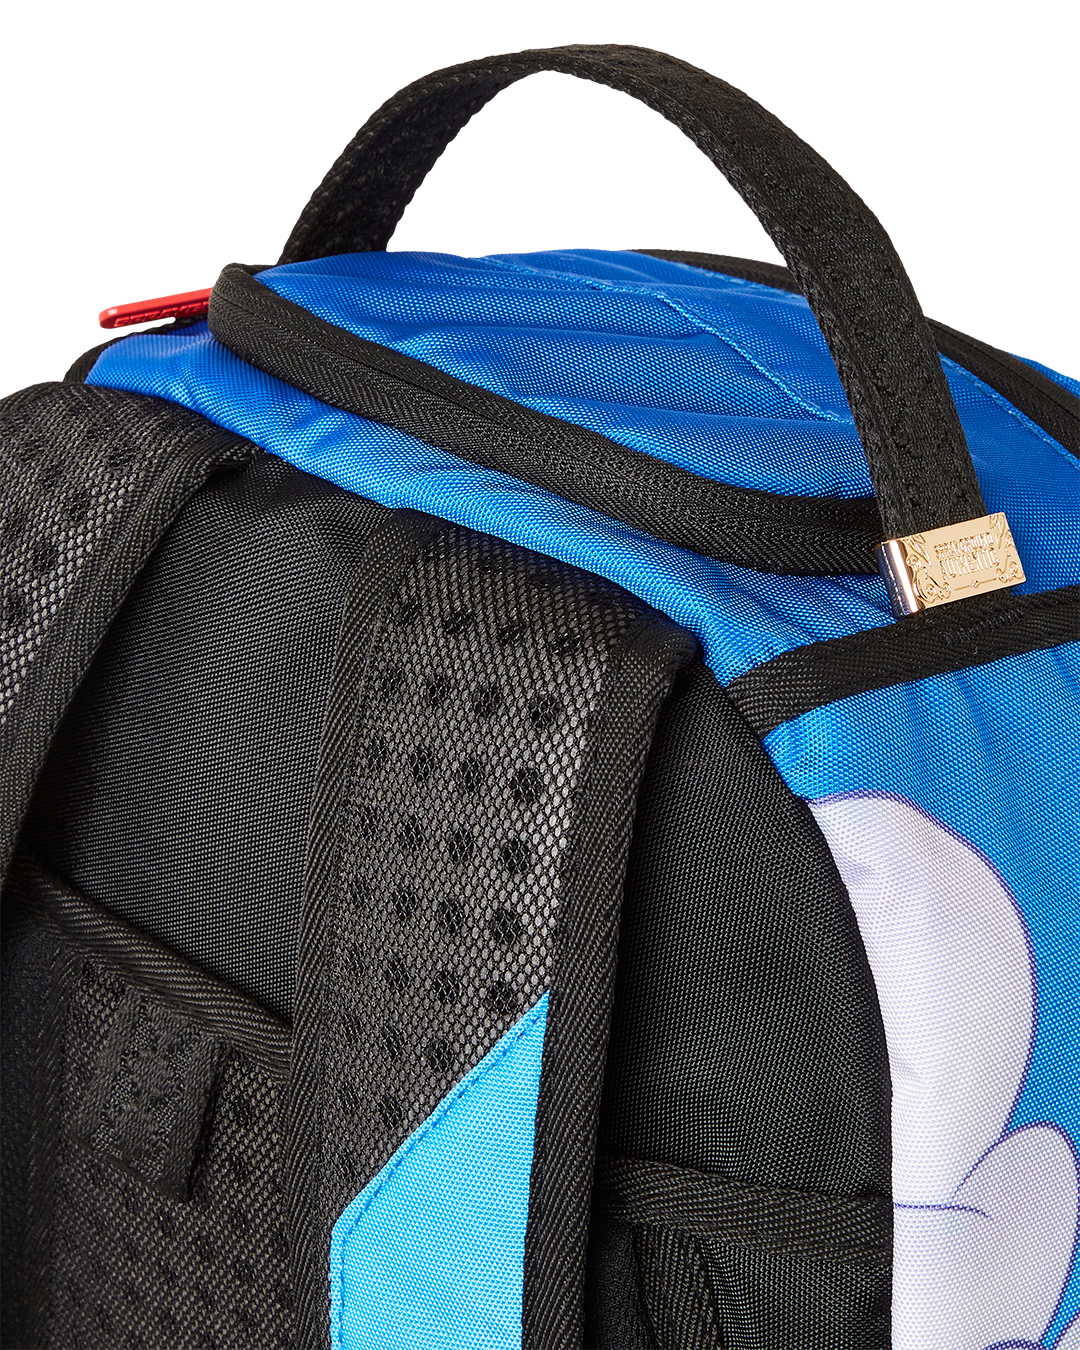 Garfield print backpack, Sprayground